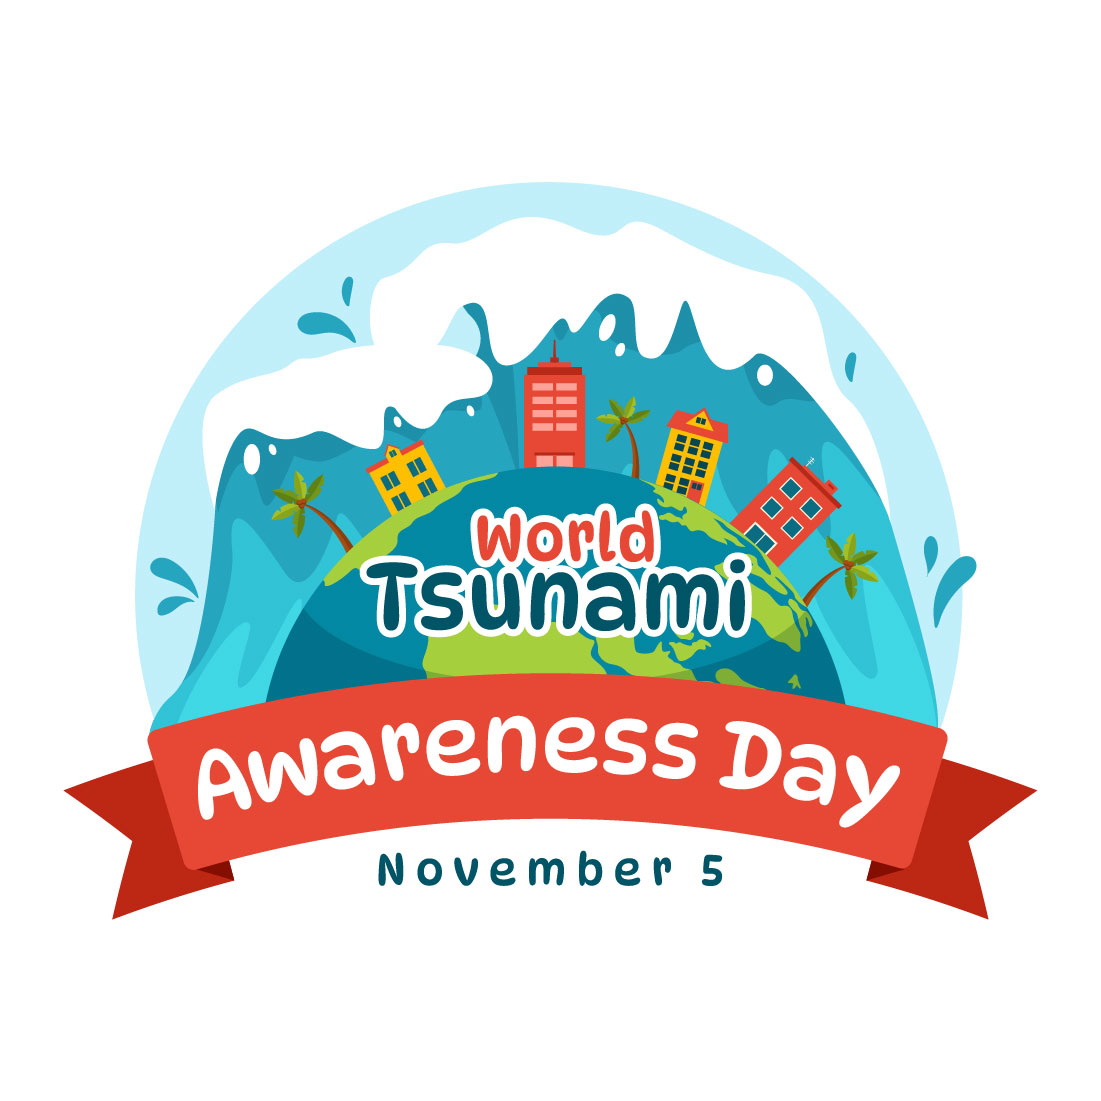 12 World Tsunami Awareness Day Illustration cover image.